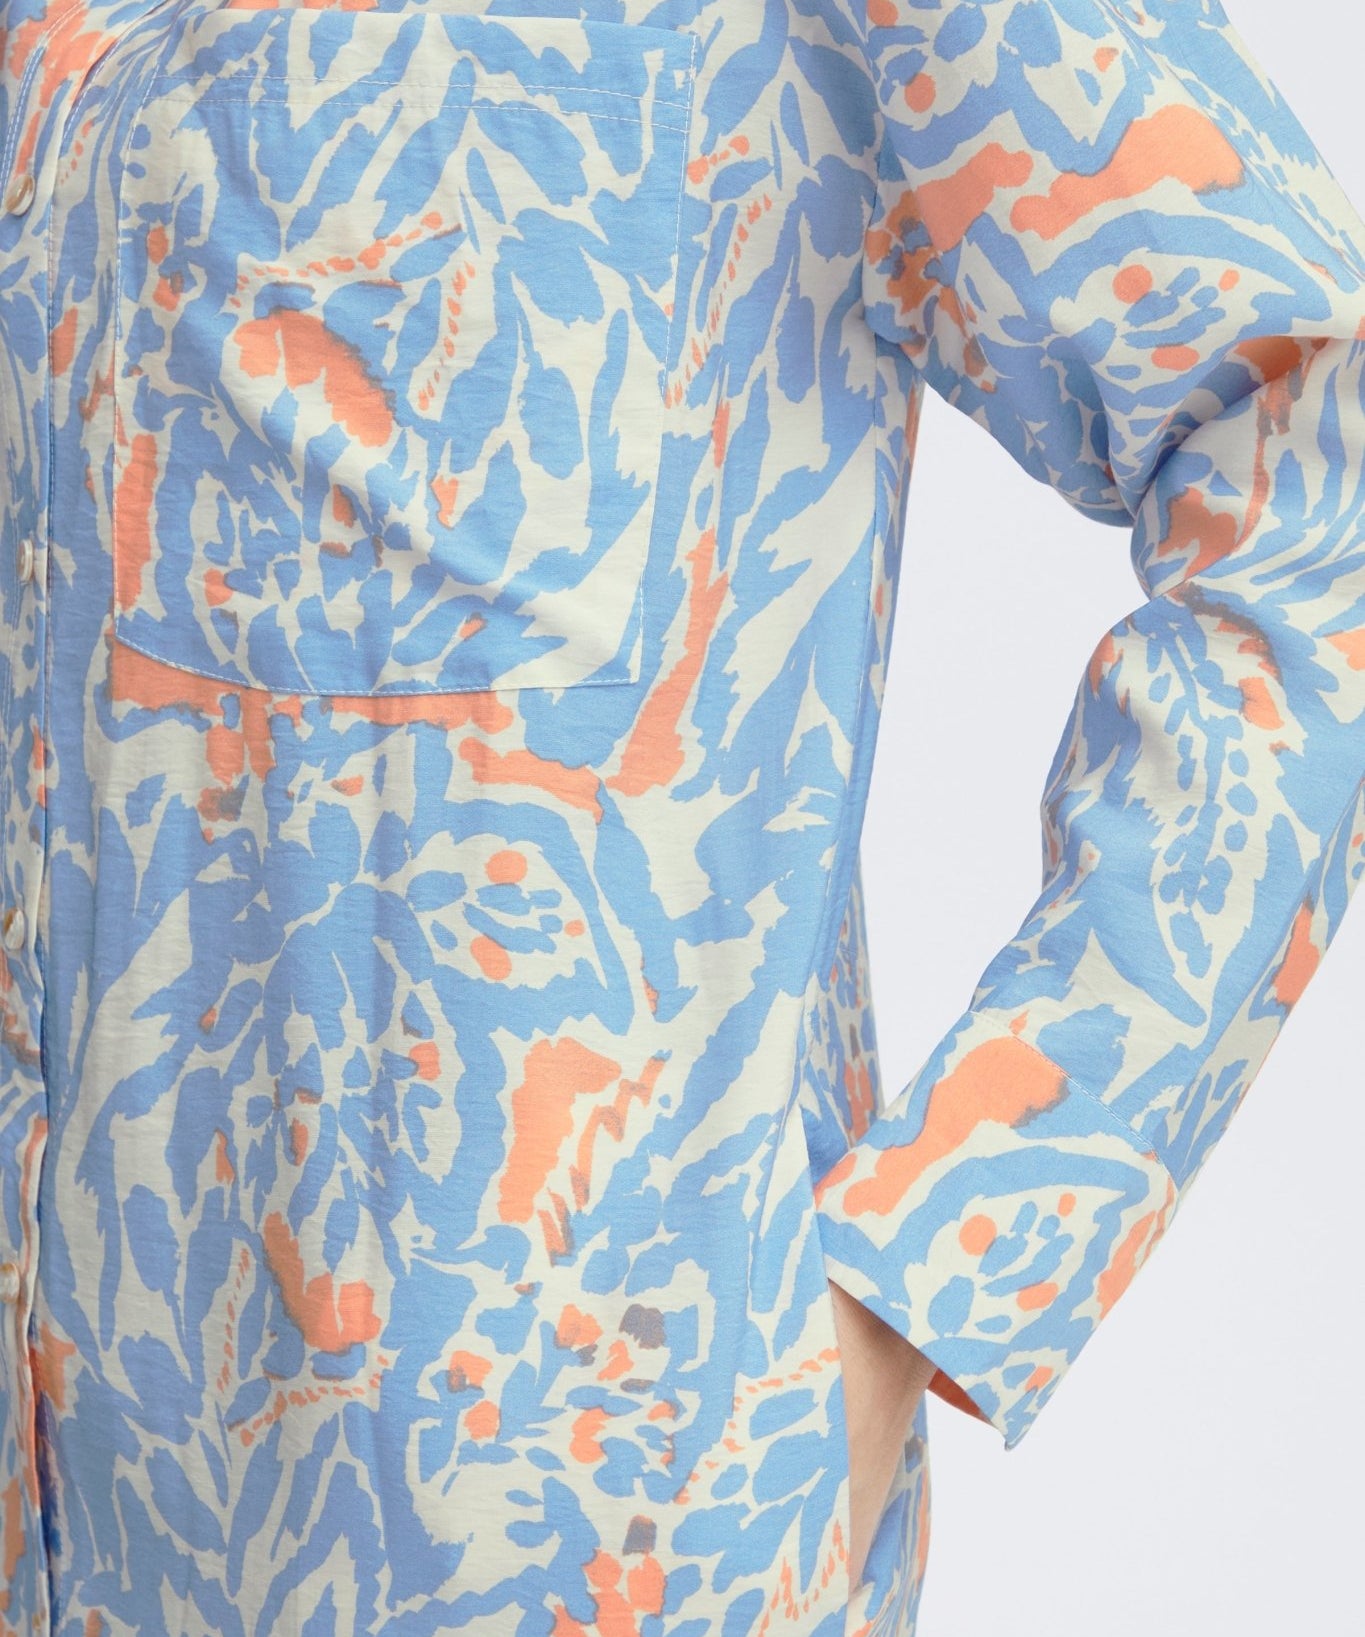 Bita dress by Fransa - Blue Sky Fashions & Lingerie